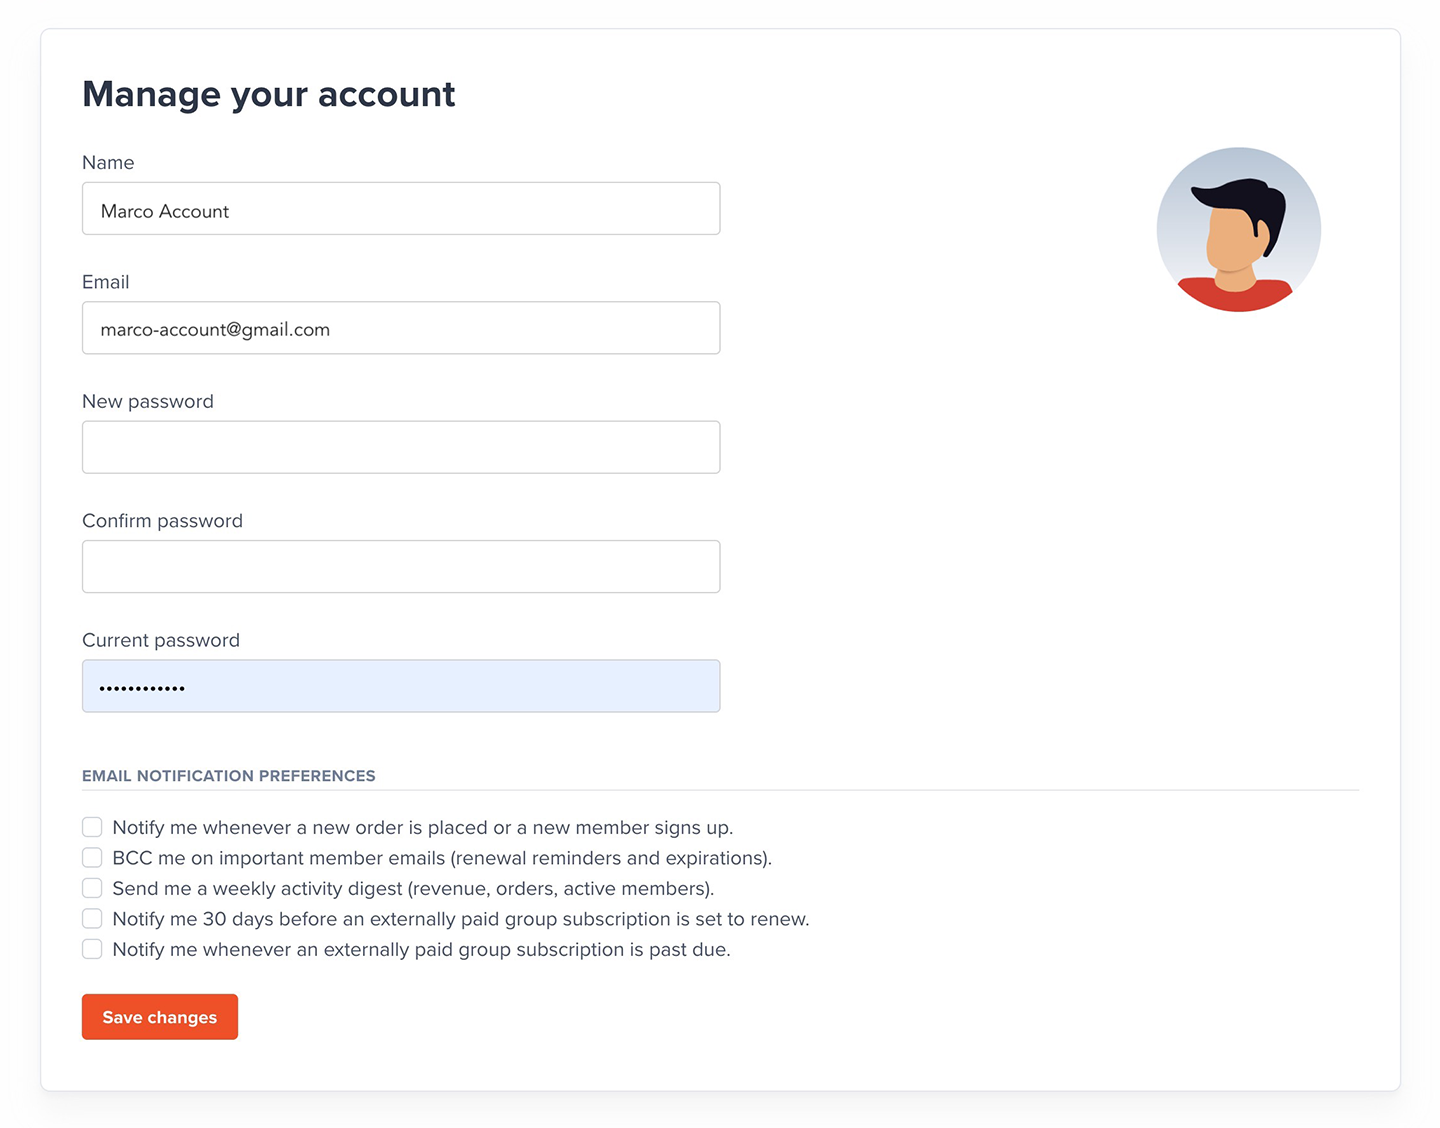 Manage Account tab